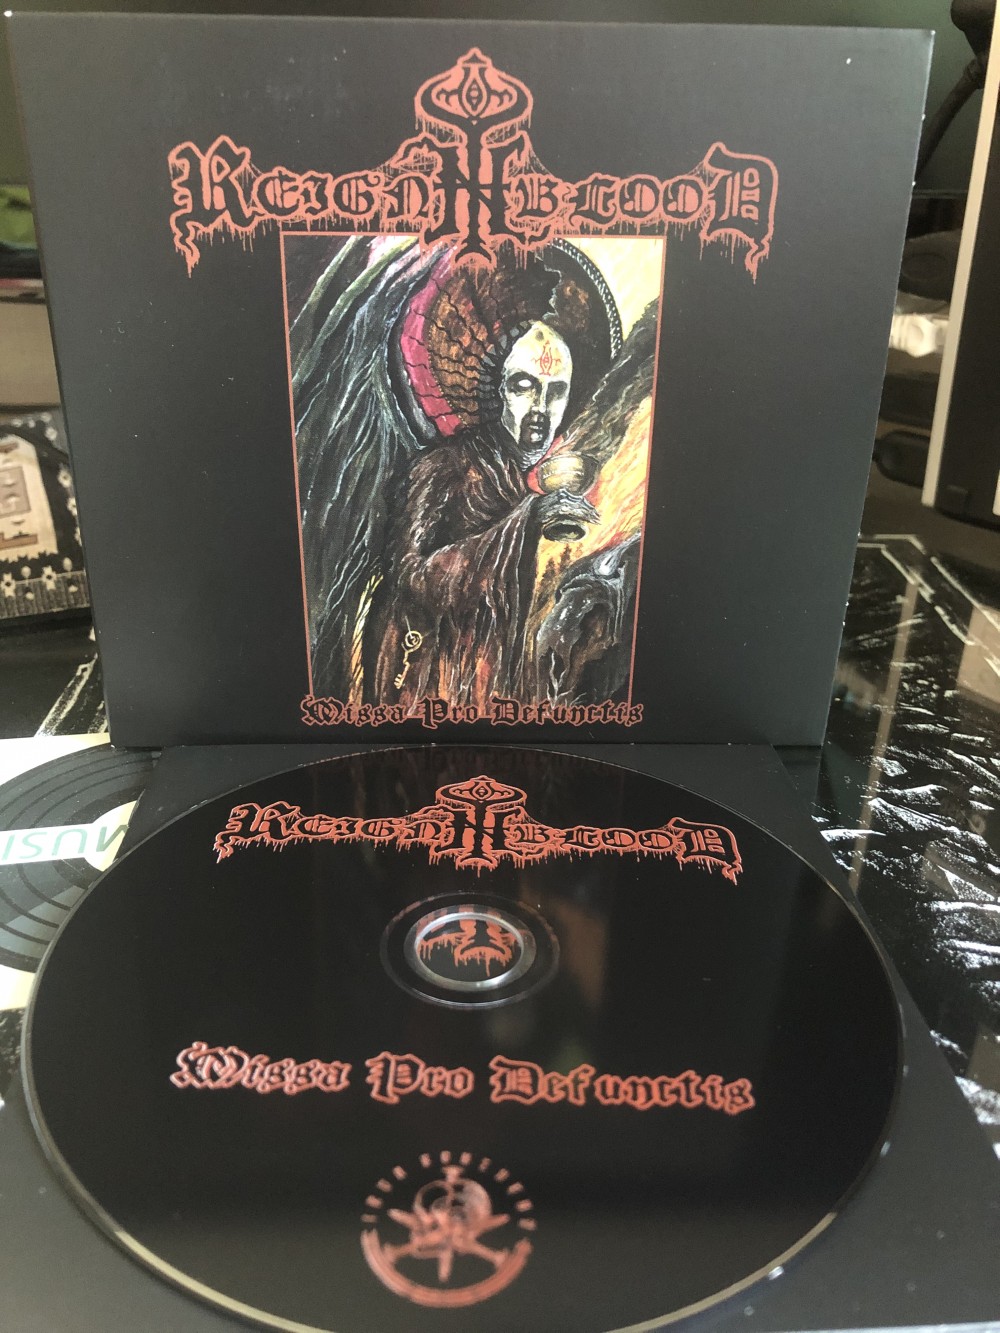 Reign in Blood - Missa pro Defunctis CD Photo